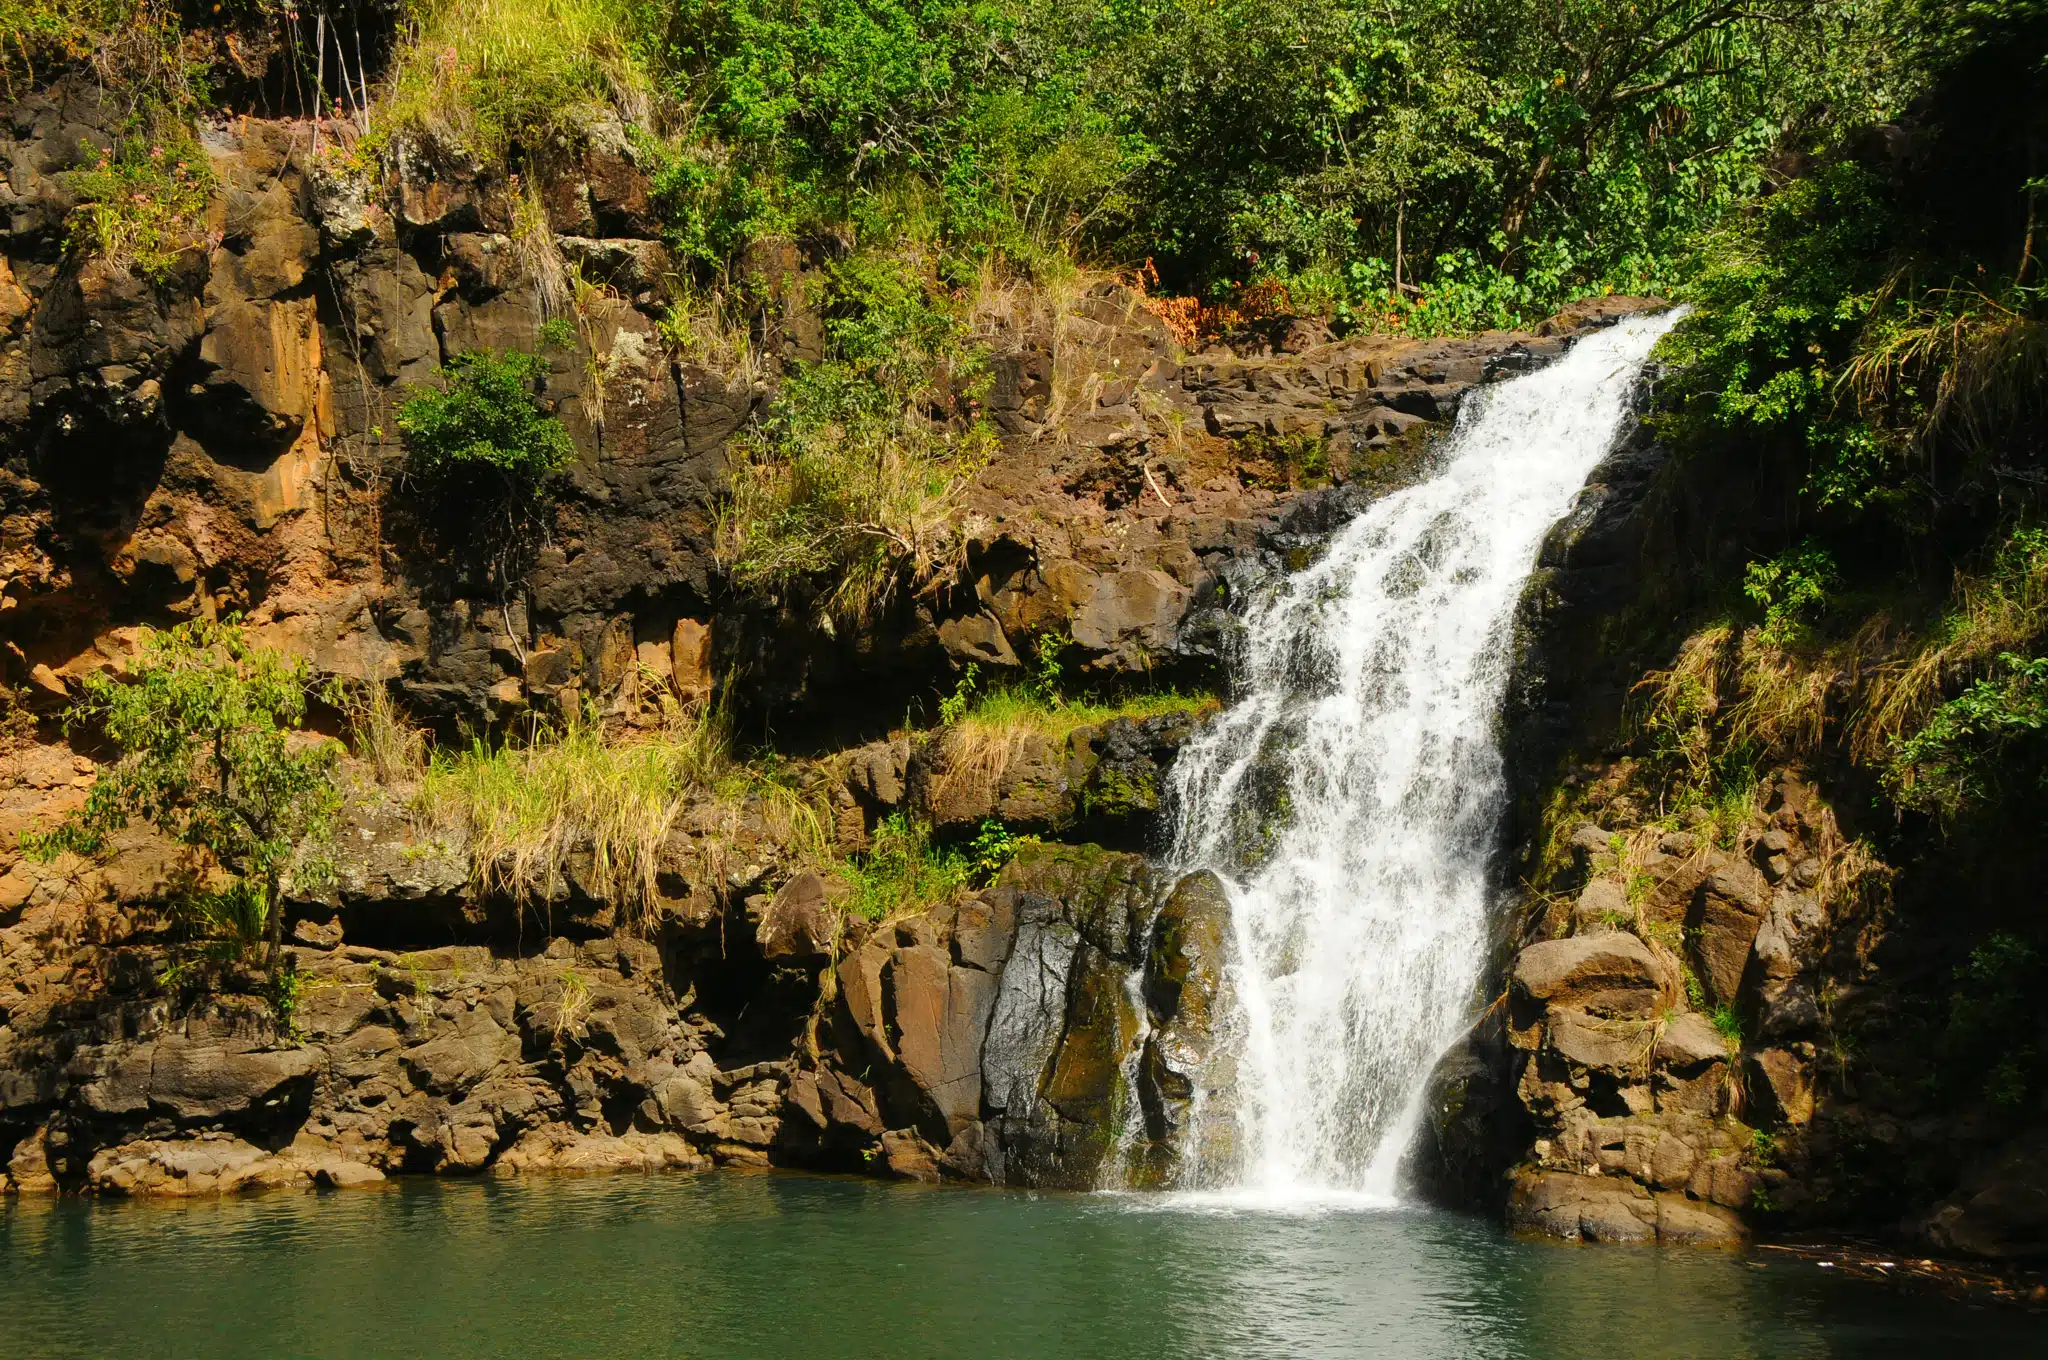 Waimea Falls is a Waterfall located in the city of Haleiwa on Oahu, Hawaii